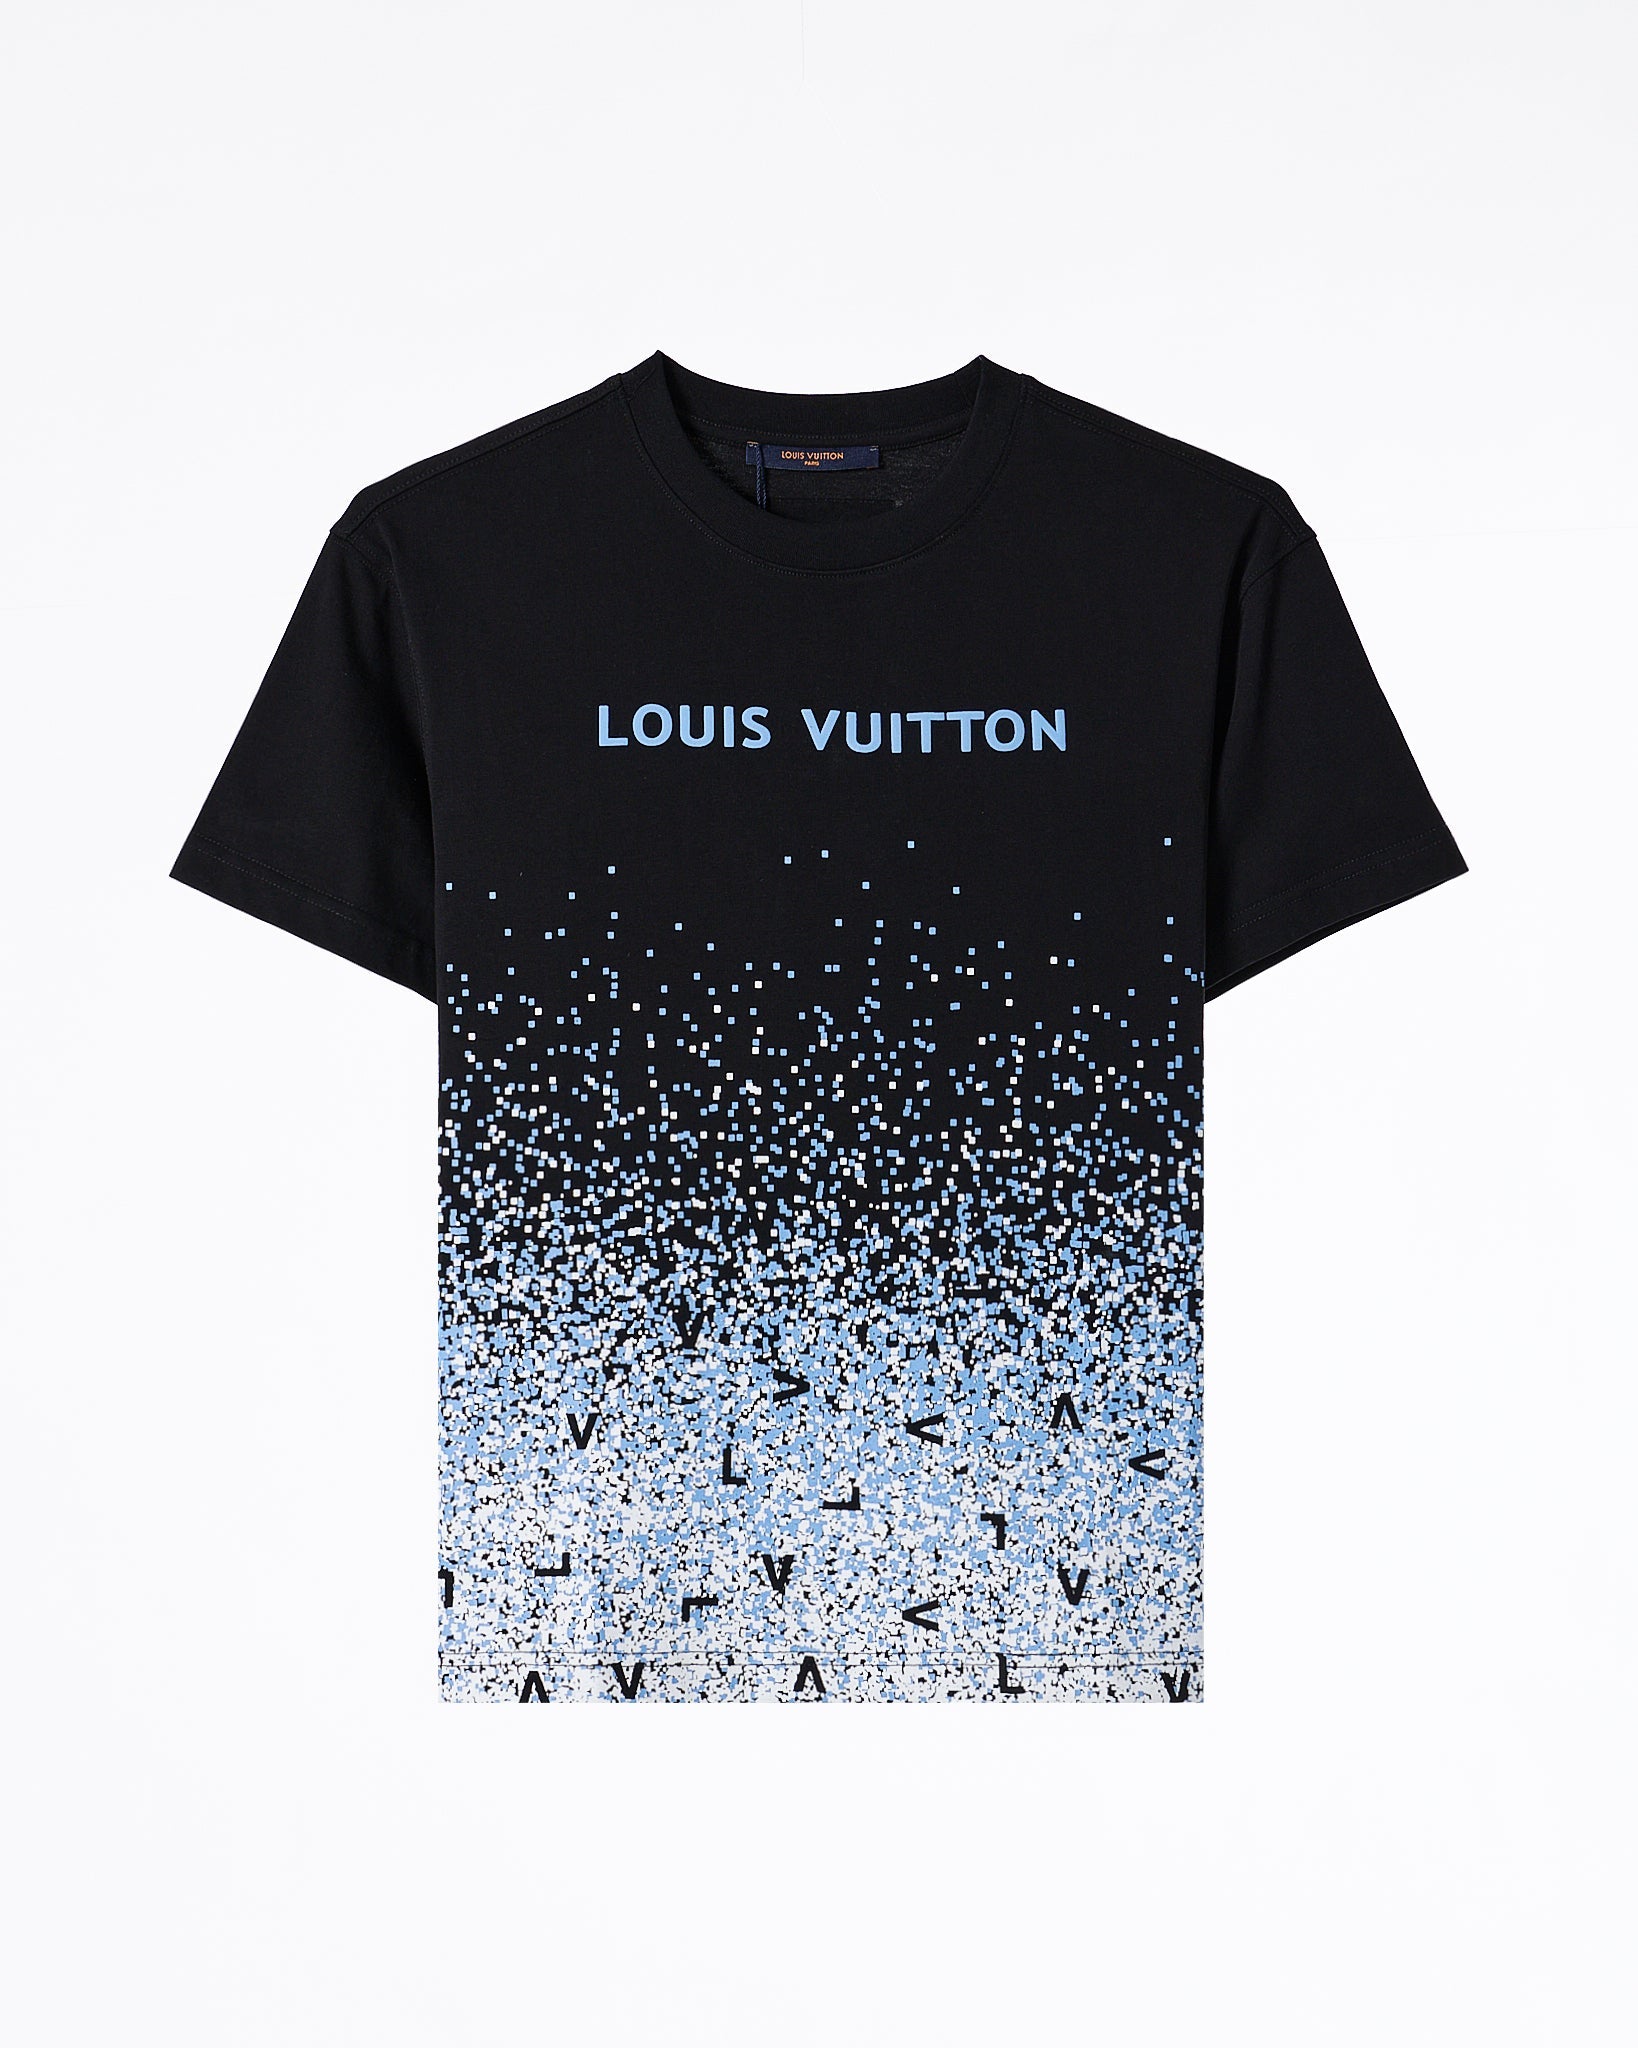 LOUIS VUITTON LV MONOGRAM GRADIENT BLACK WHITE T SHIRT